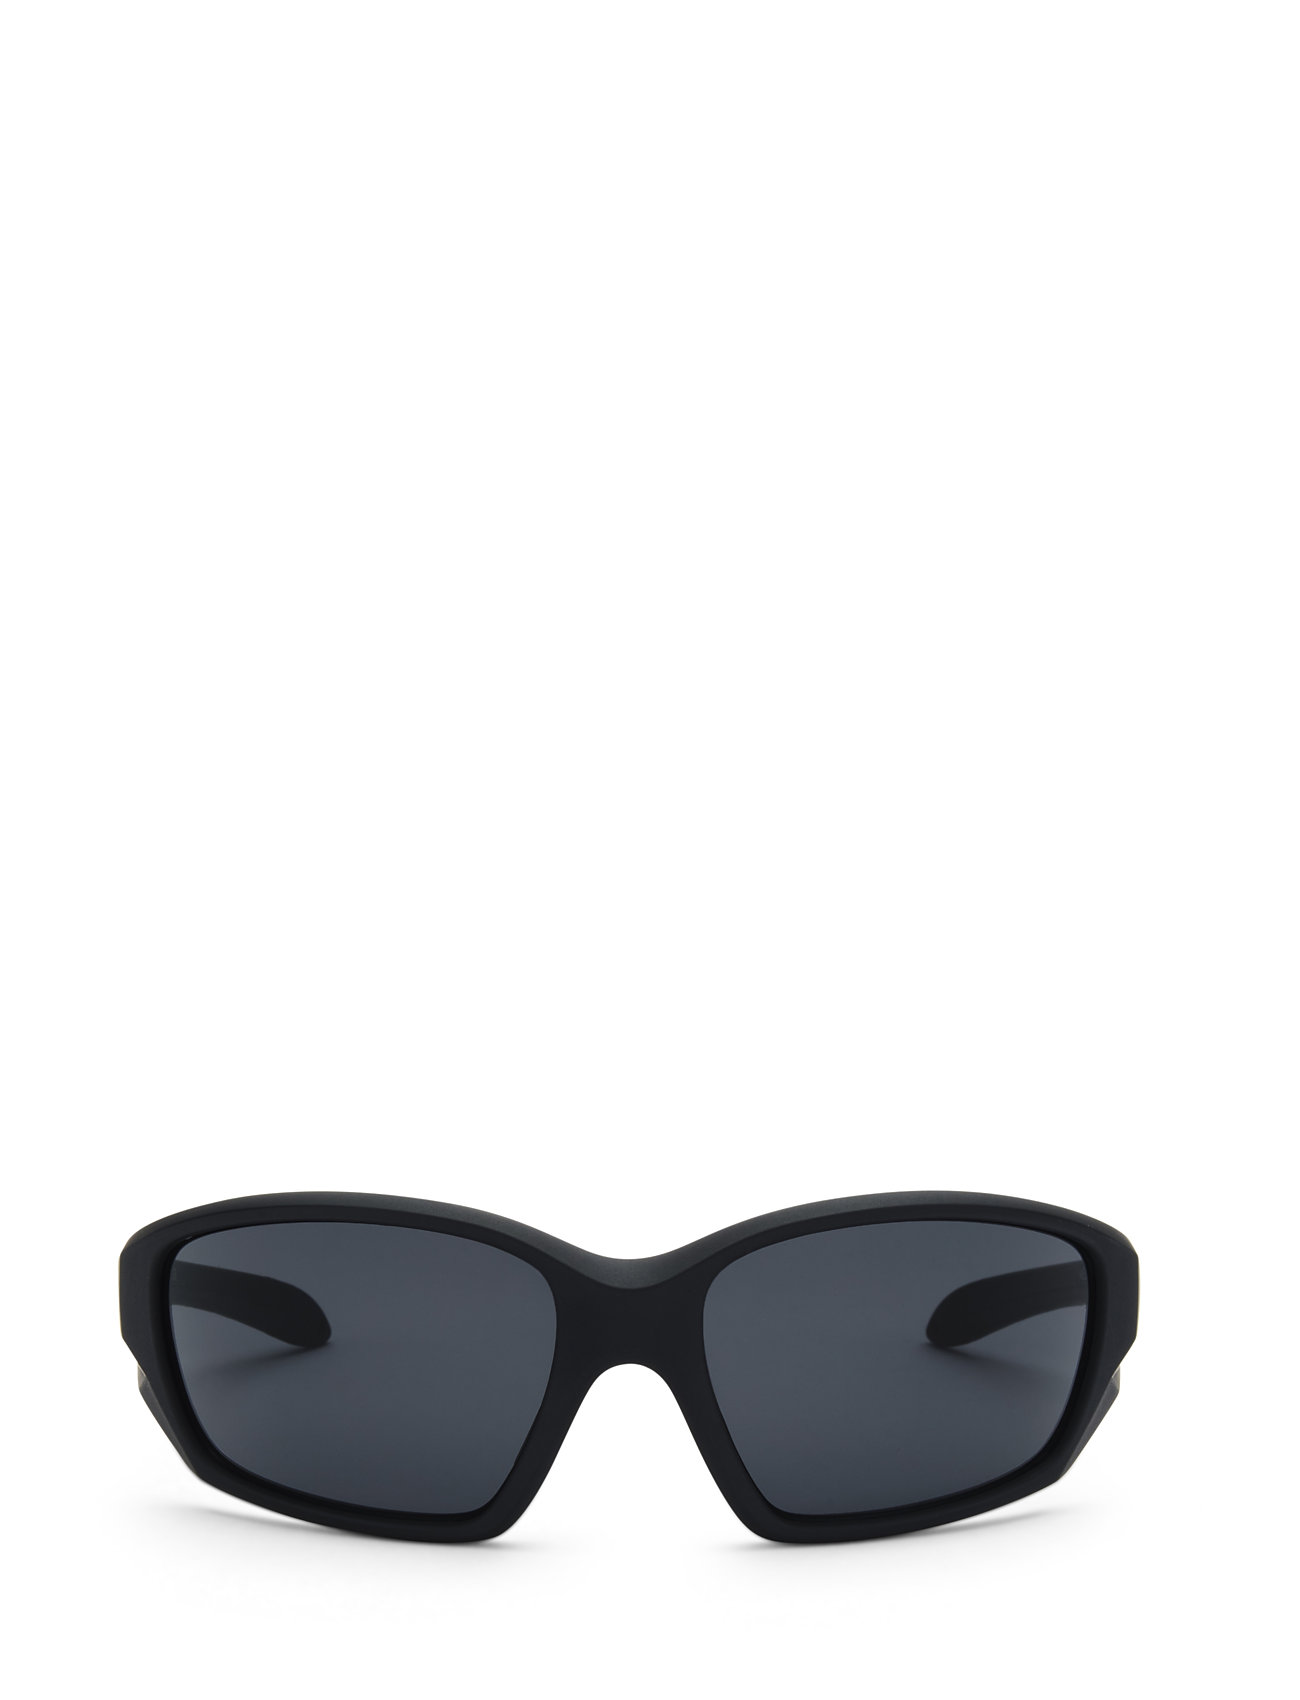 Momentum Sport Sunglasses Aviator Sunglasses Black MessyWeekend